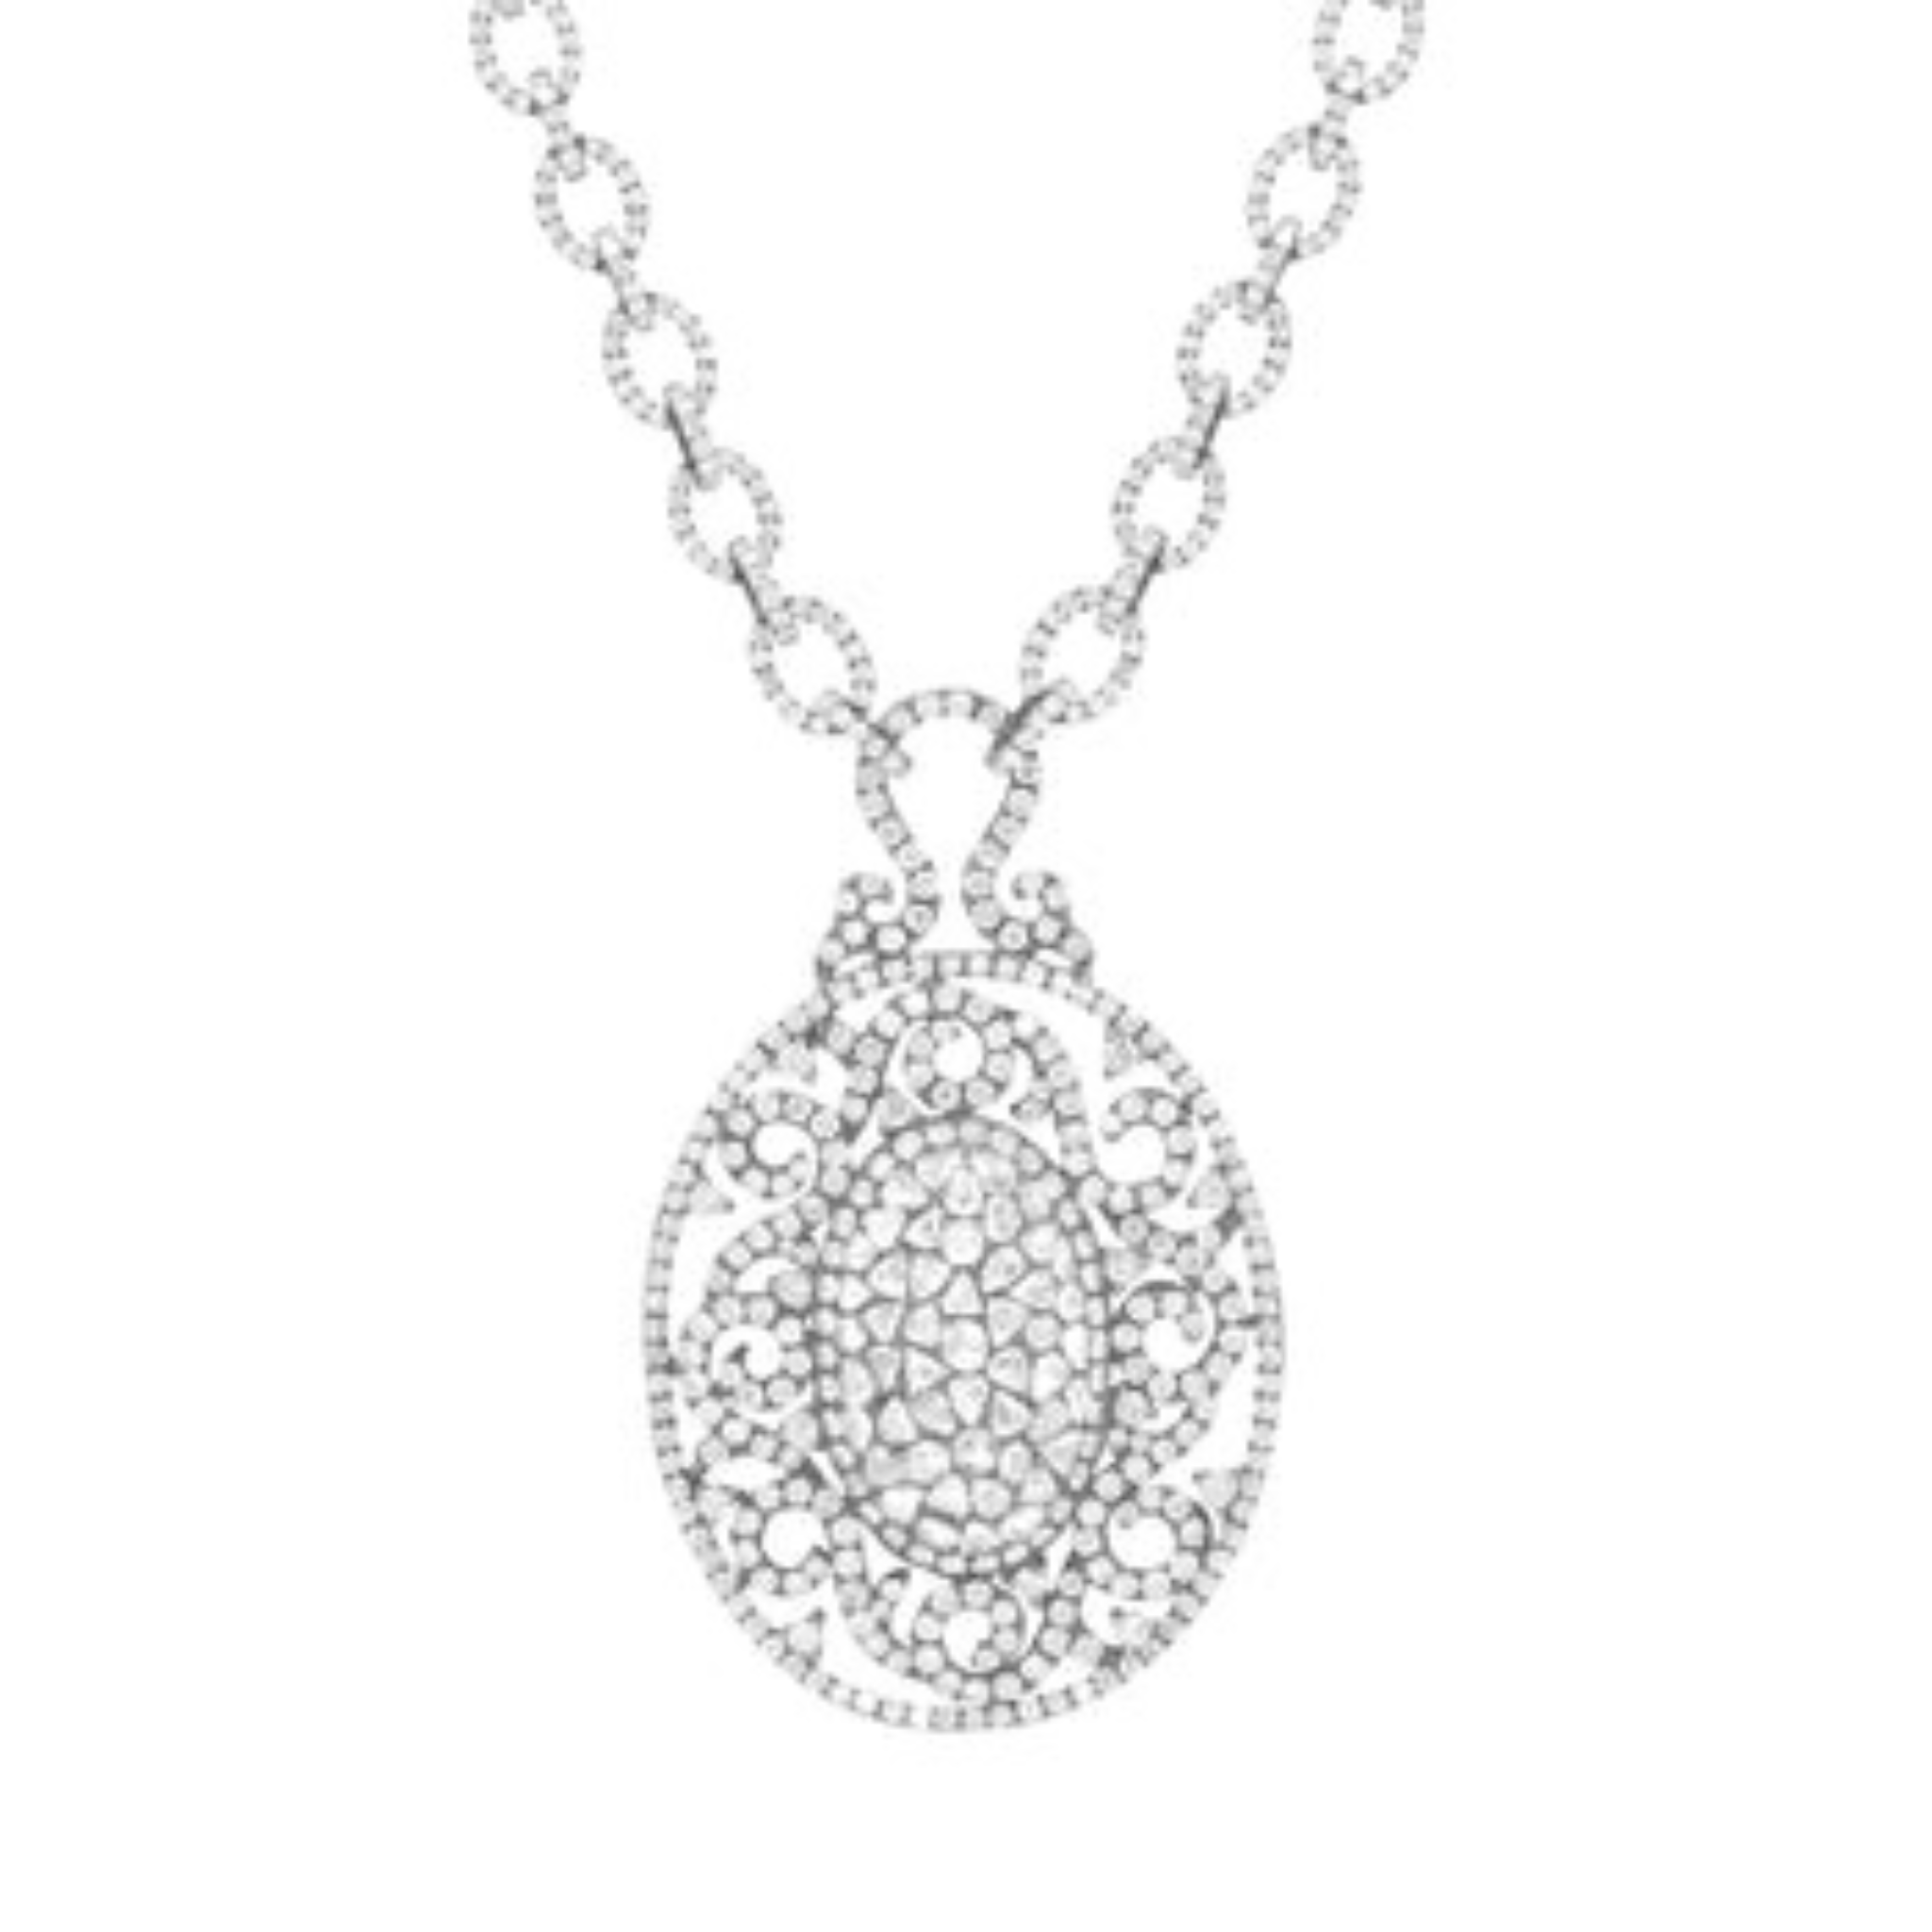 12ct Rose Cut Diamond Necklace.jpg